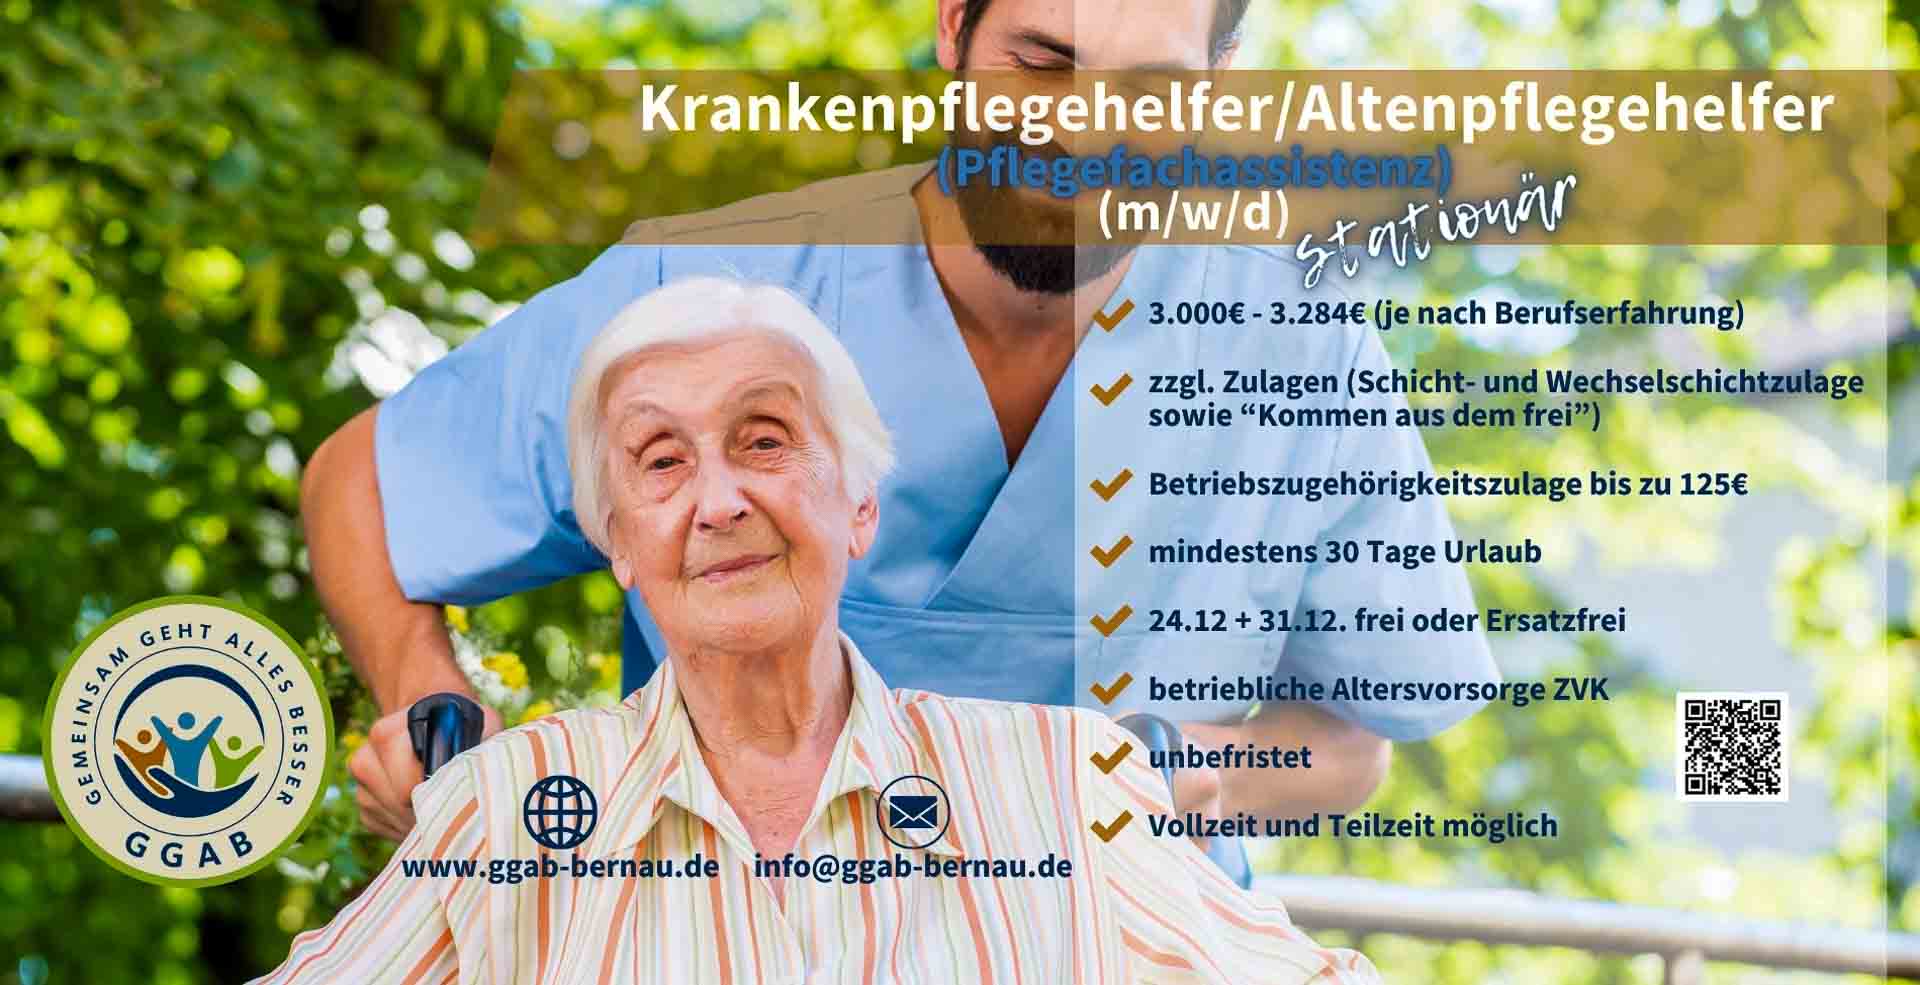 GGAB Bernau: Krankenpflegehelfer/Altenpflegehelfer (m/w/d) gesucht